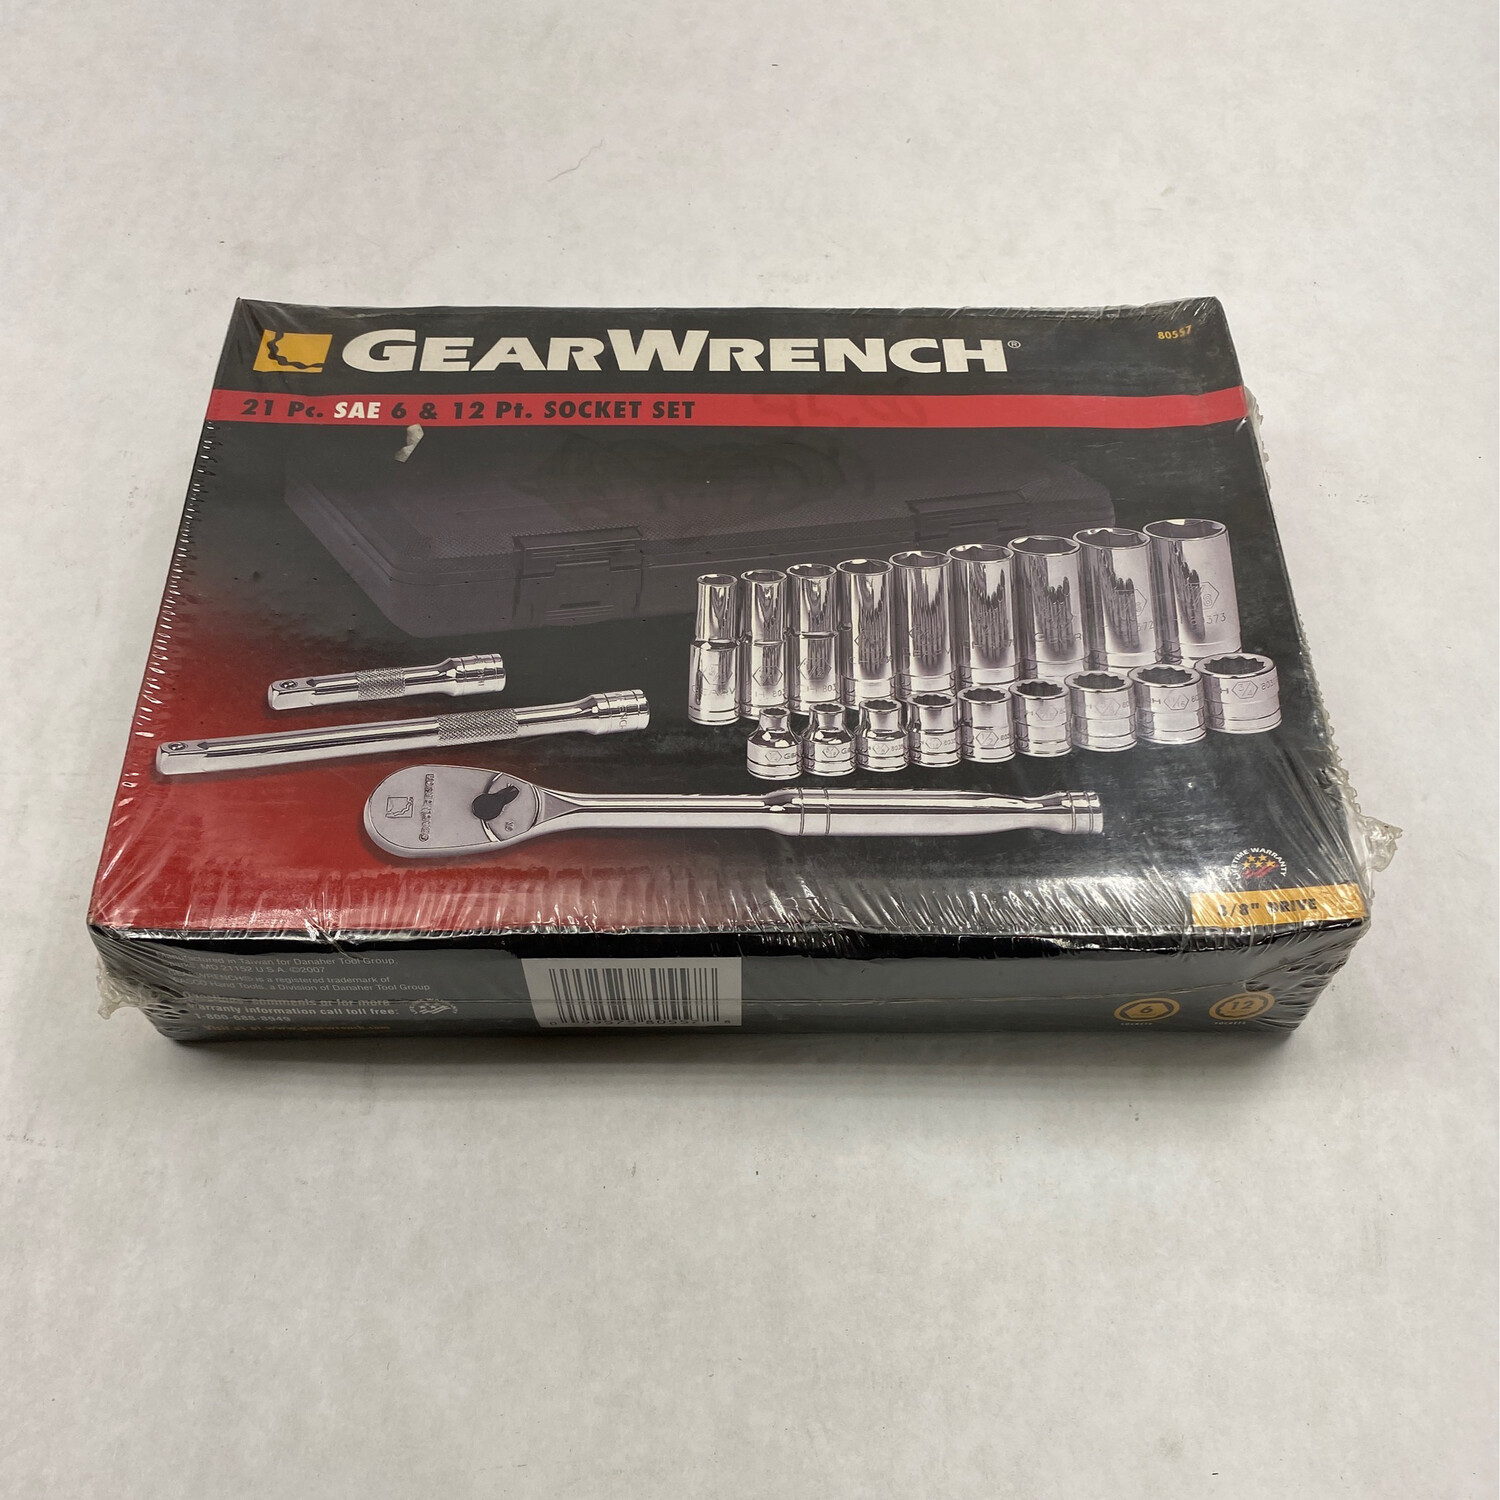 Gearwrench 21pc. 3/8” Drive SAE 6 & 12 Pt. Socket Set, 80557